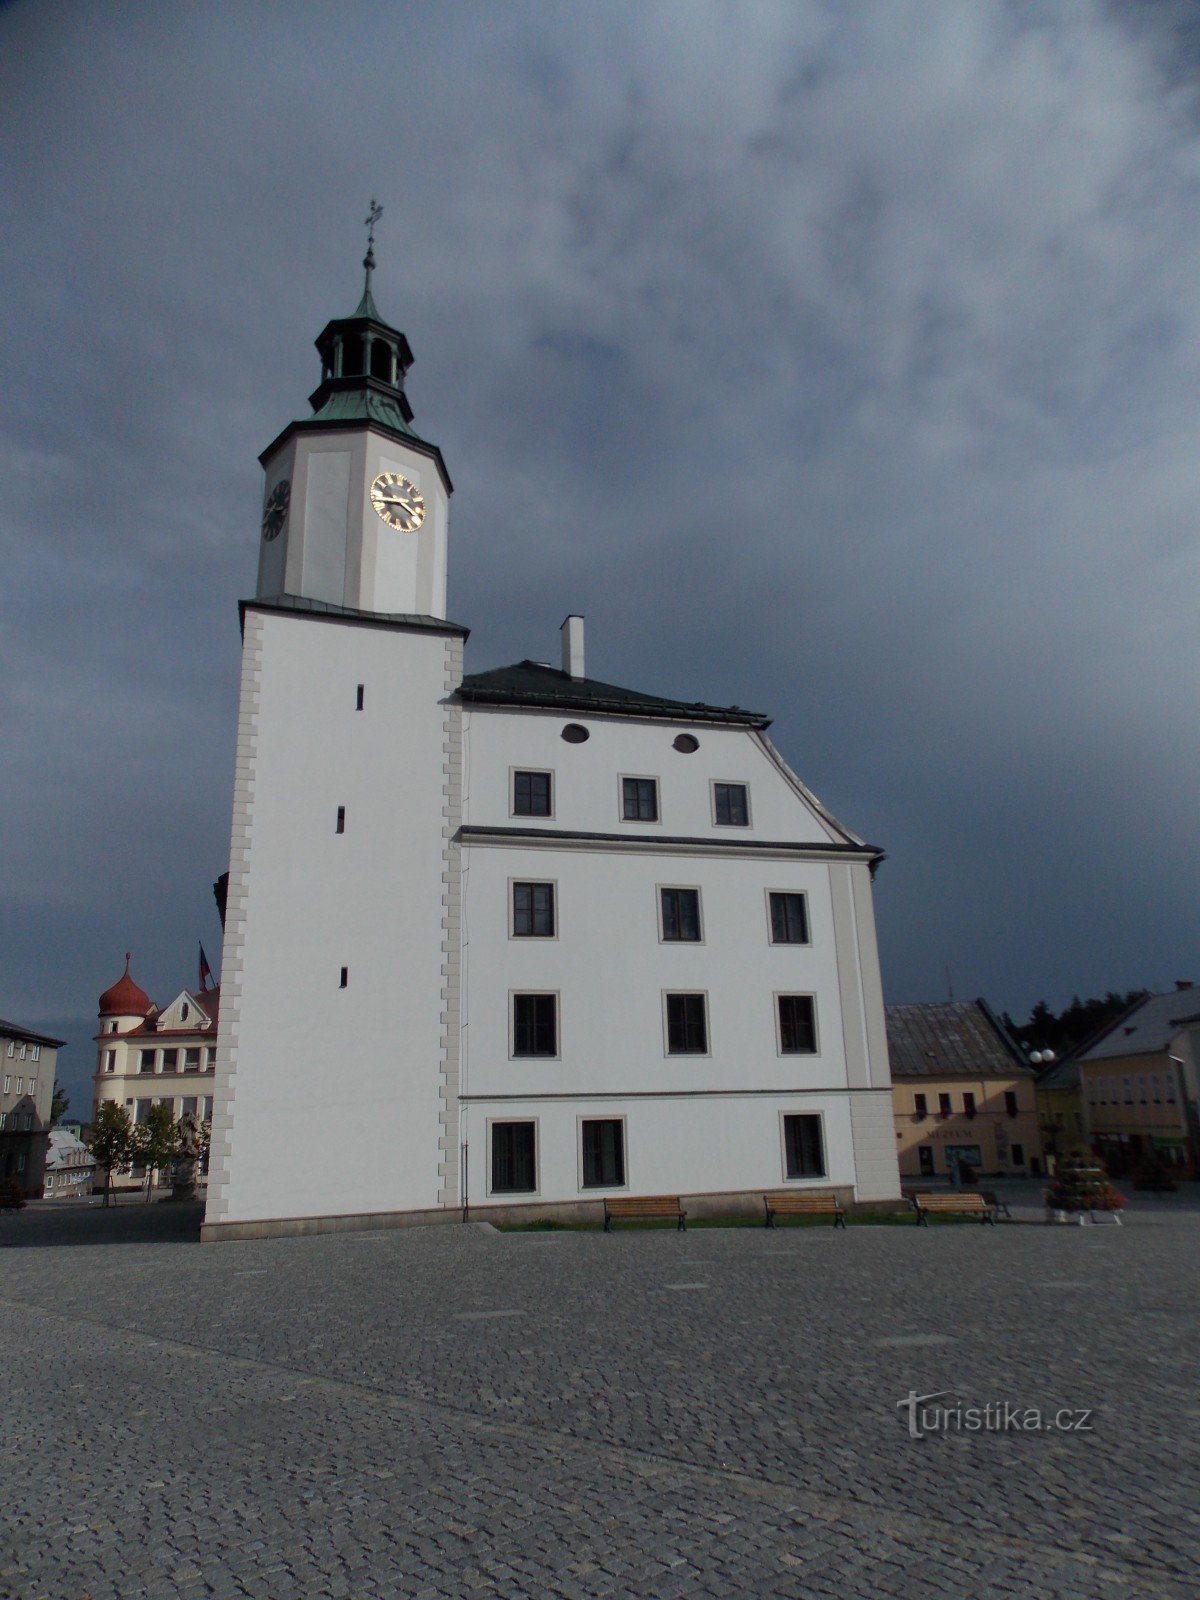 The town hall in the center of Náměstí Miru in Rymařov